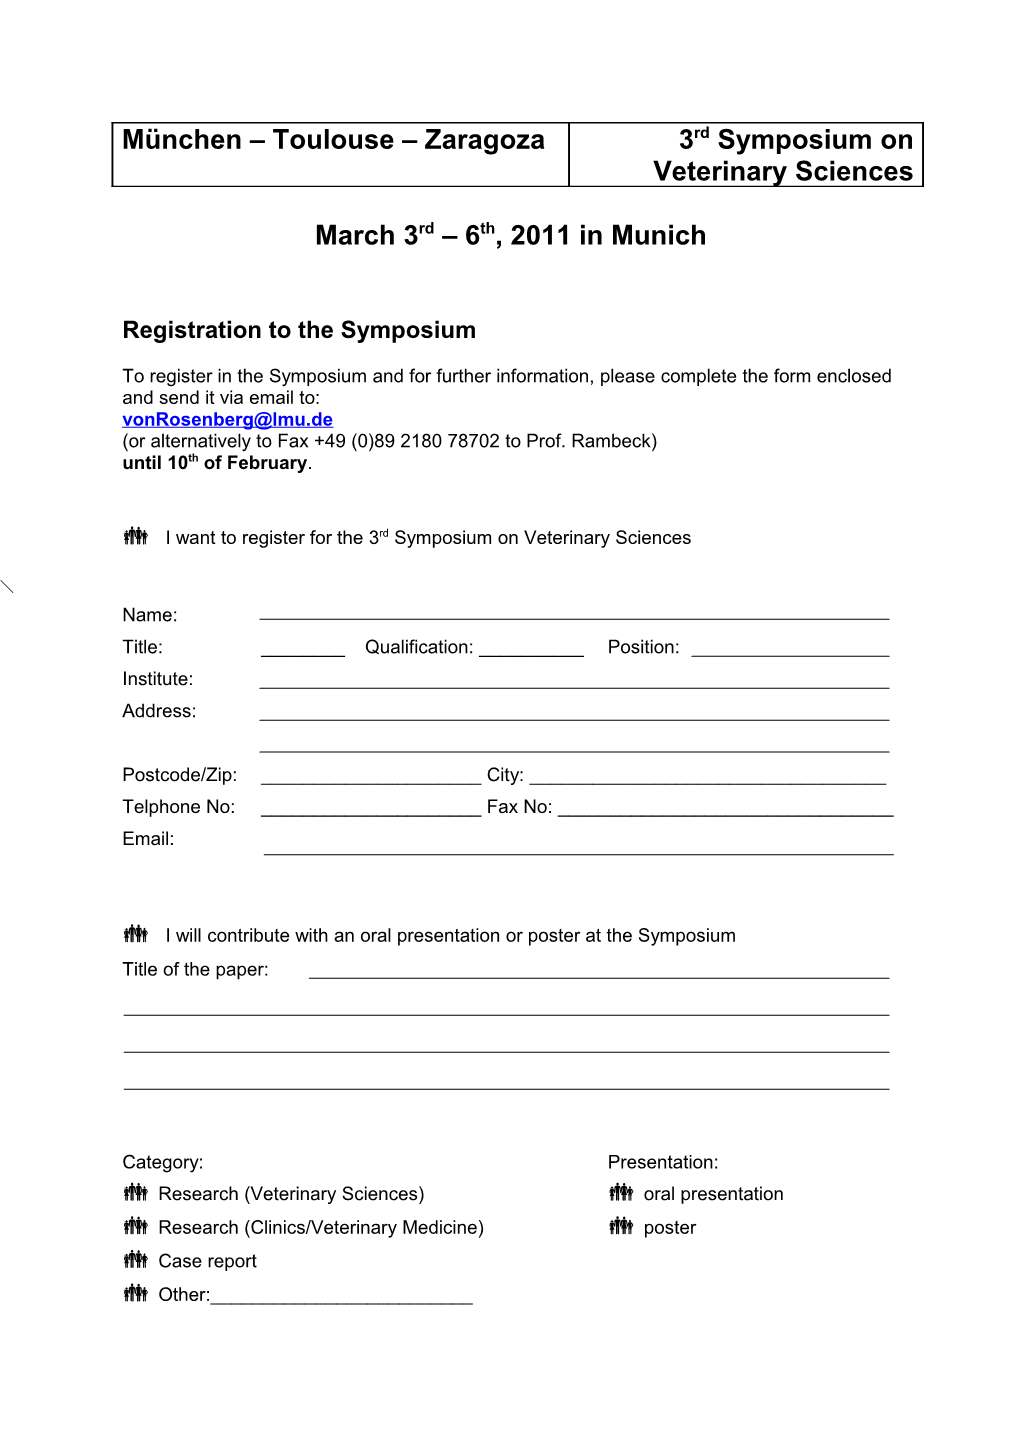 Registration to the Symposium